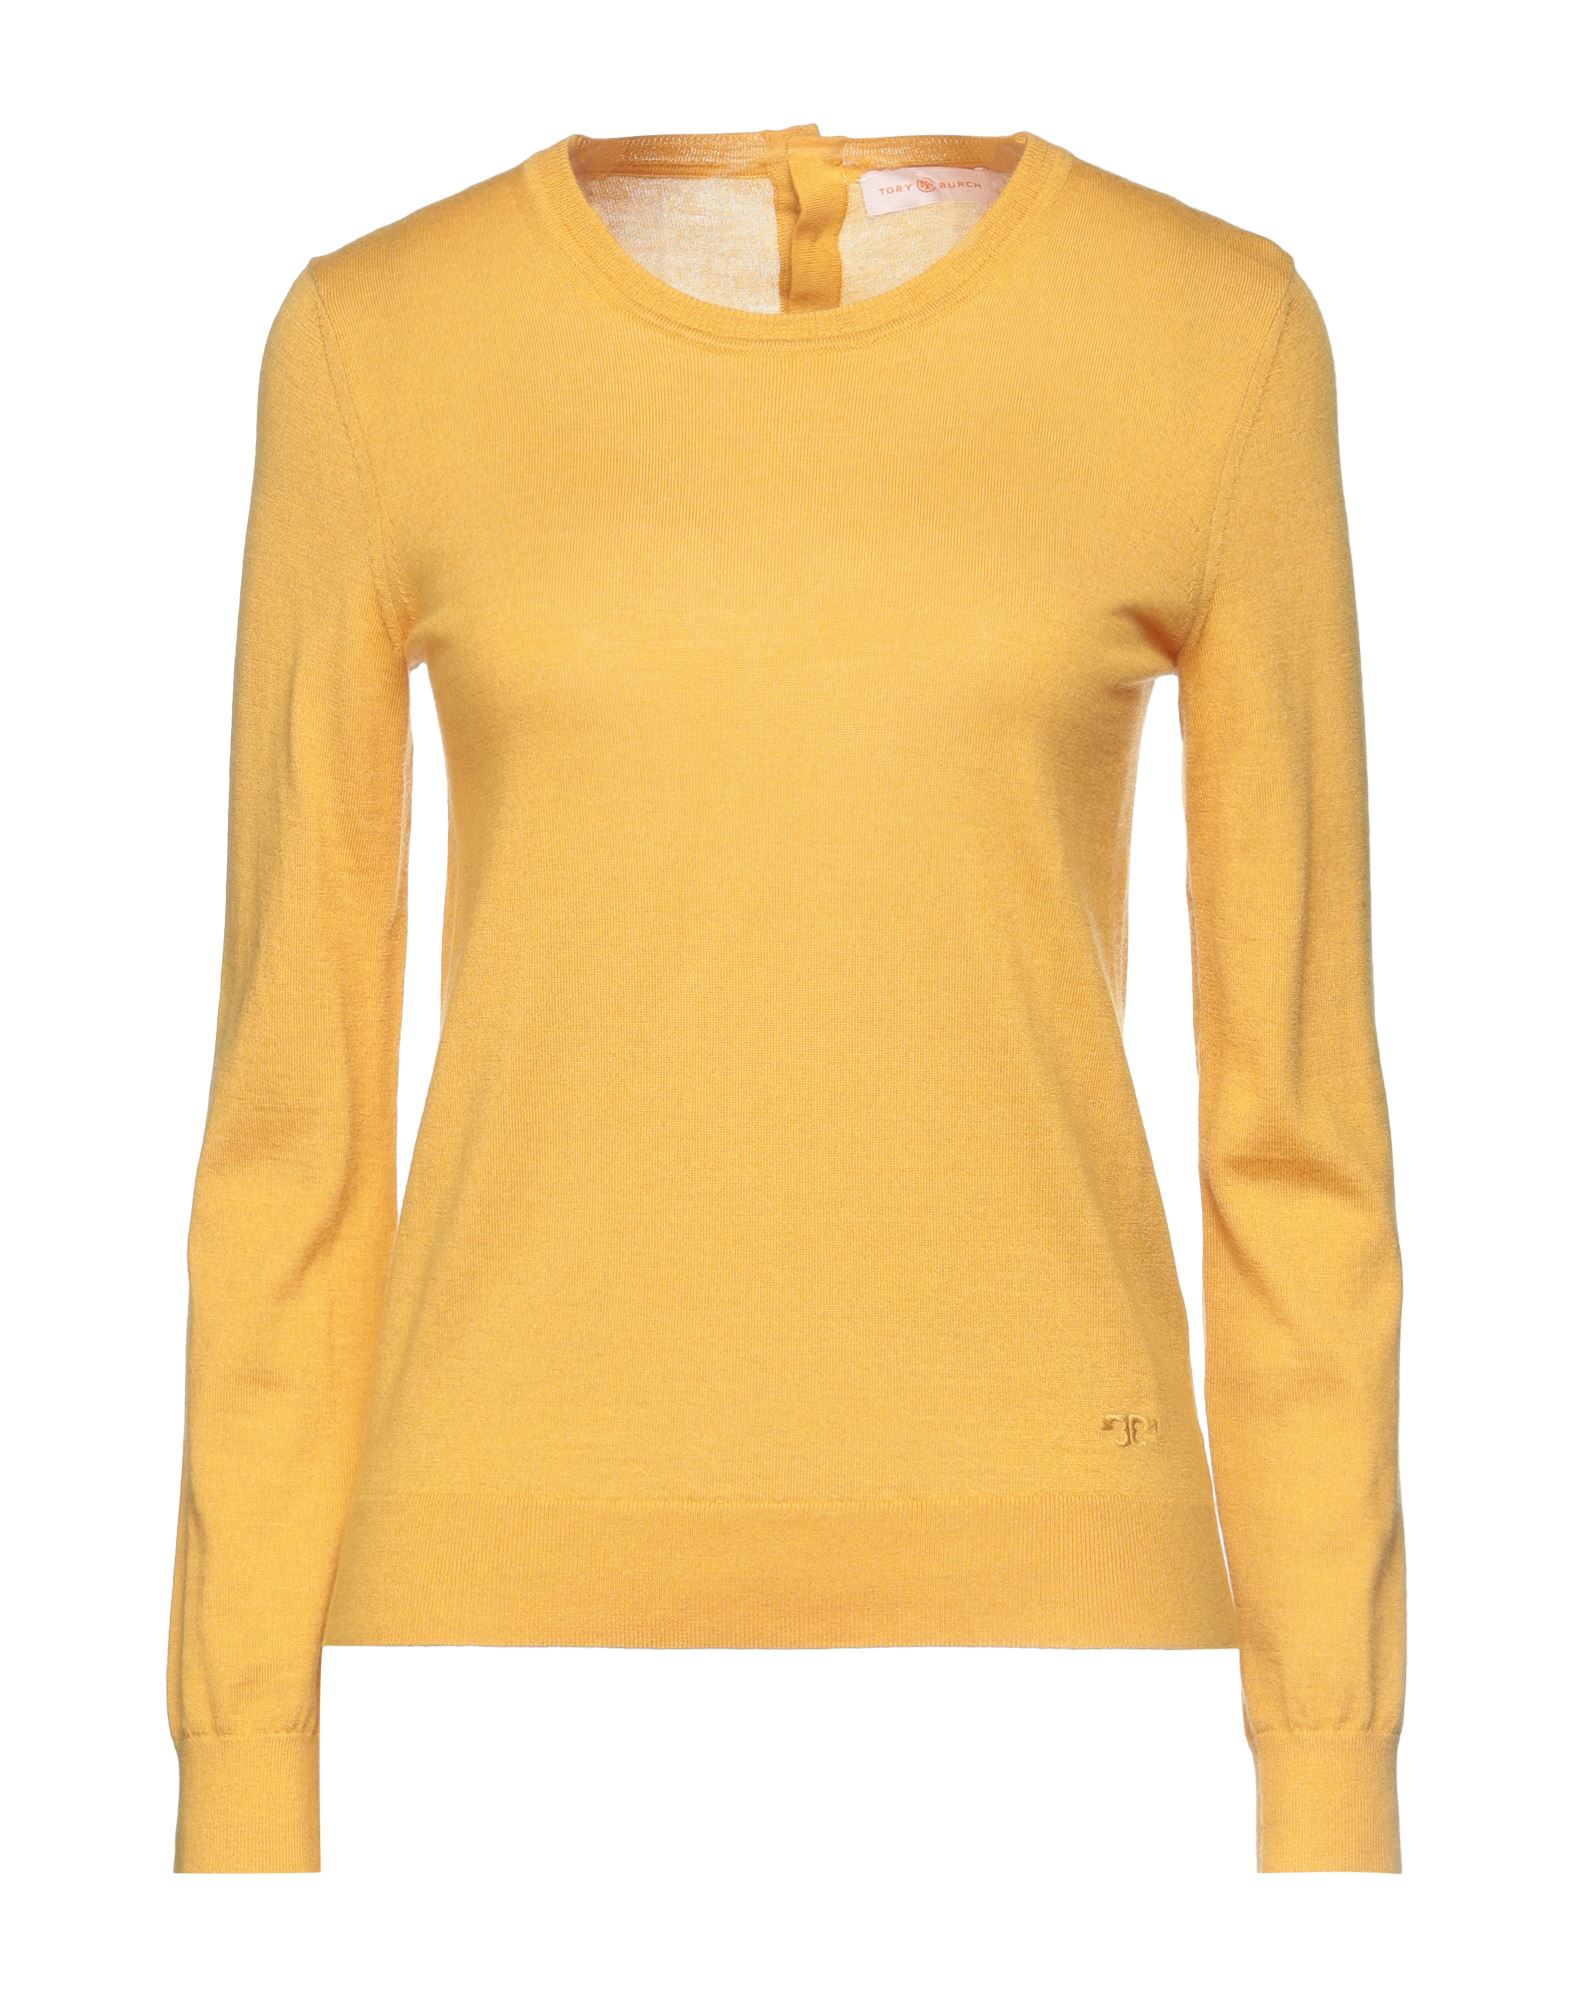 Tory Burch Sweaters In Yellow